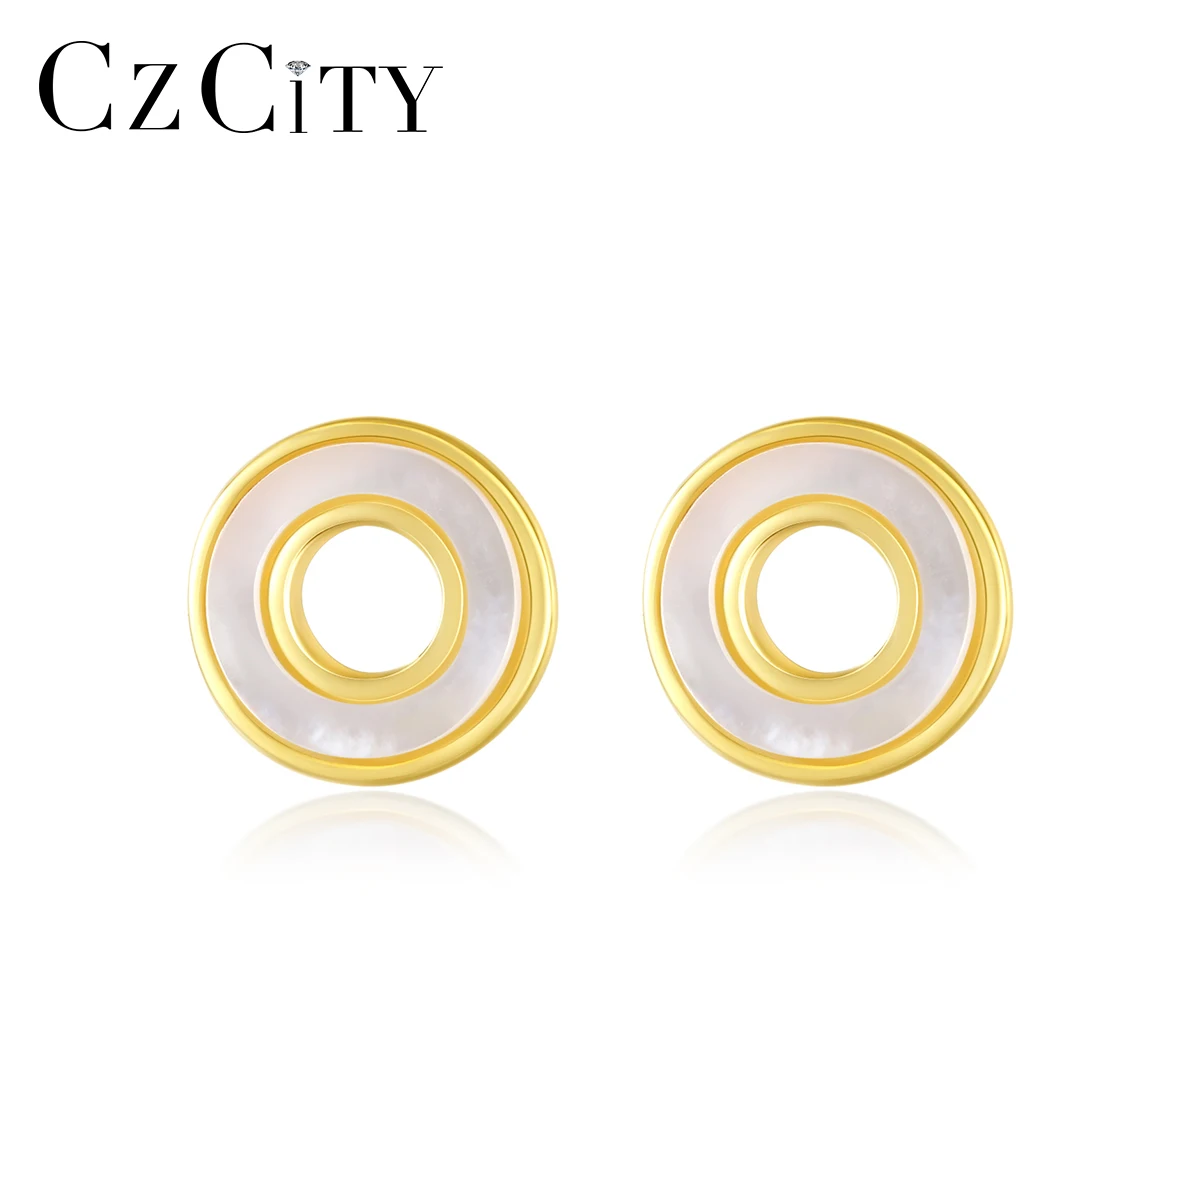 

CZCITY Charm Korean Popular Earing Women Fashion Modern Designer Ear Ring Korea Sea Shell Earring